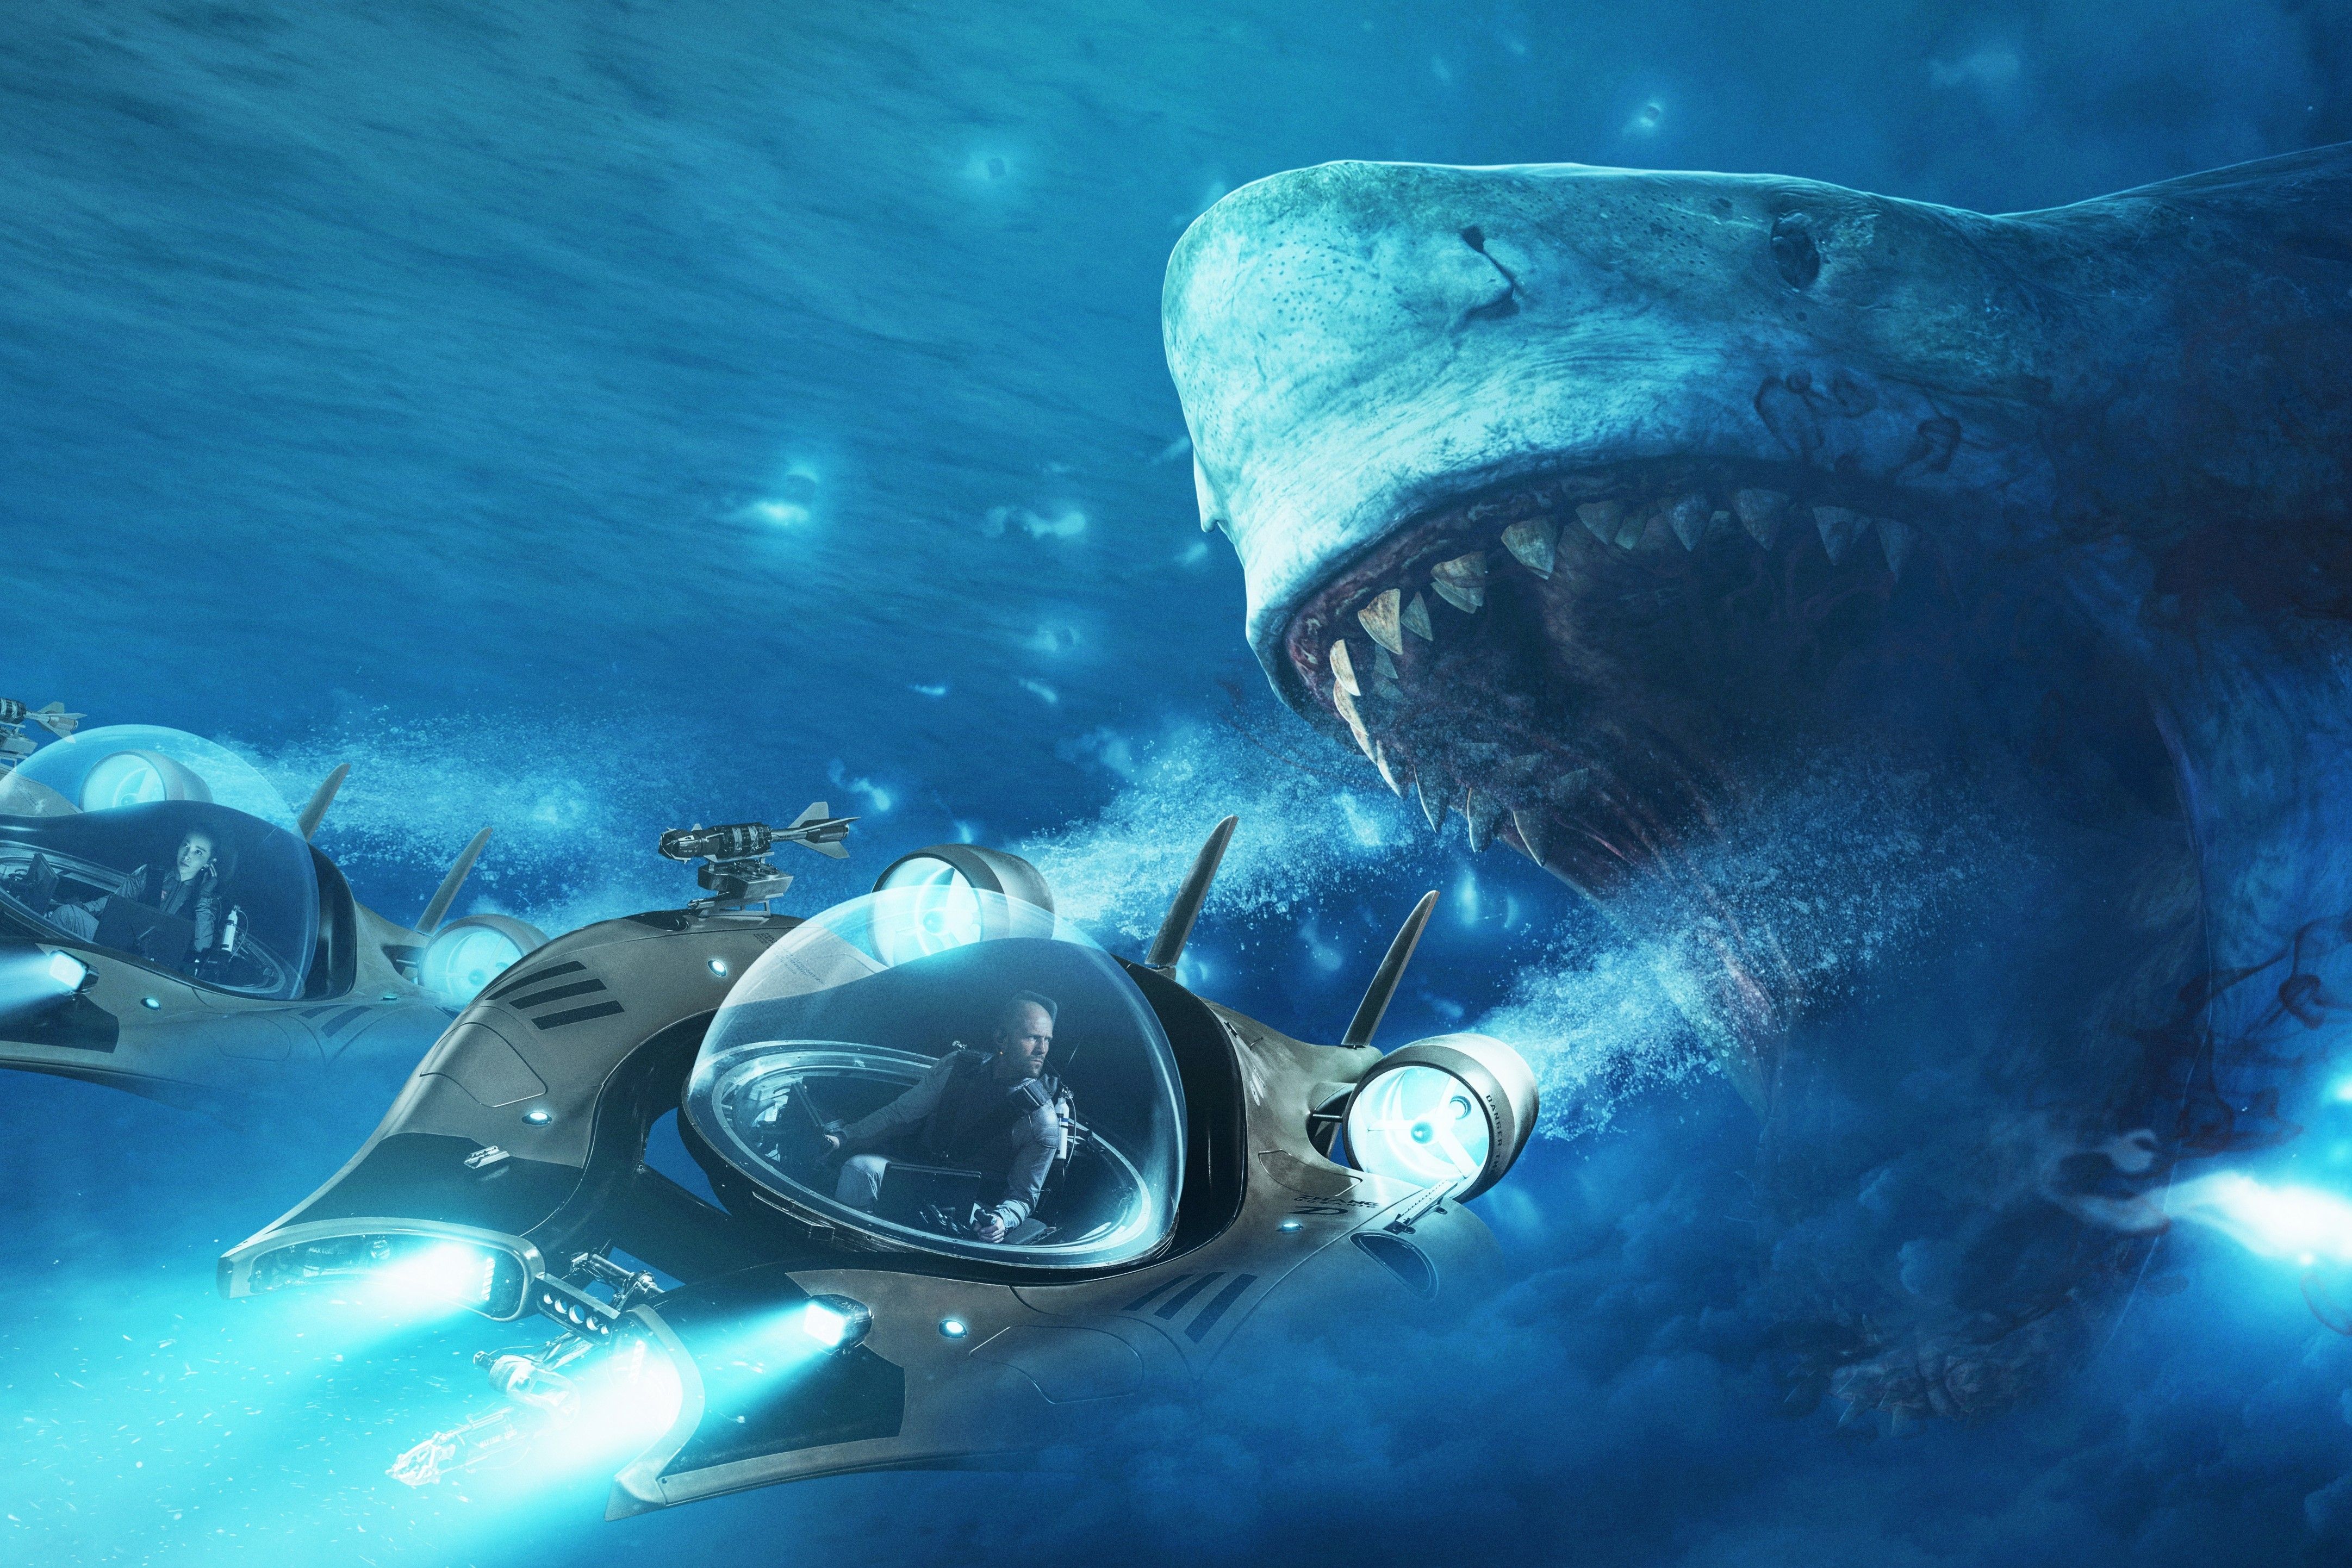 Download 4326x2884 The Meg Jason Statham, Shark Attack, Underwater Wallpaper